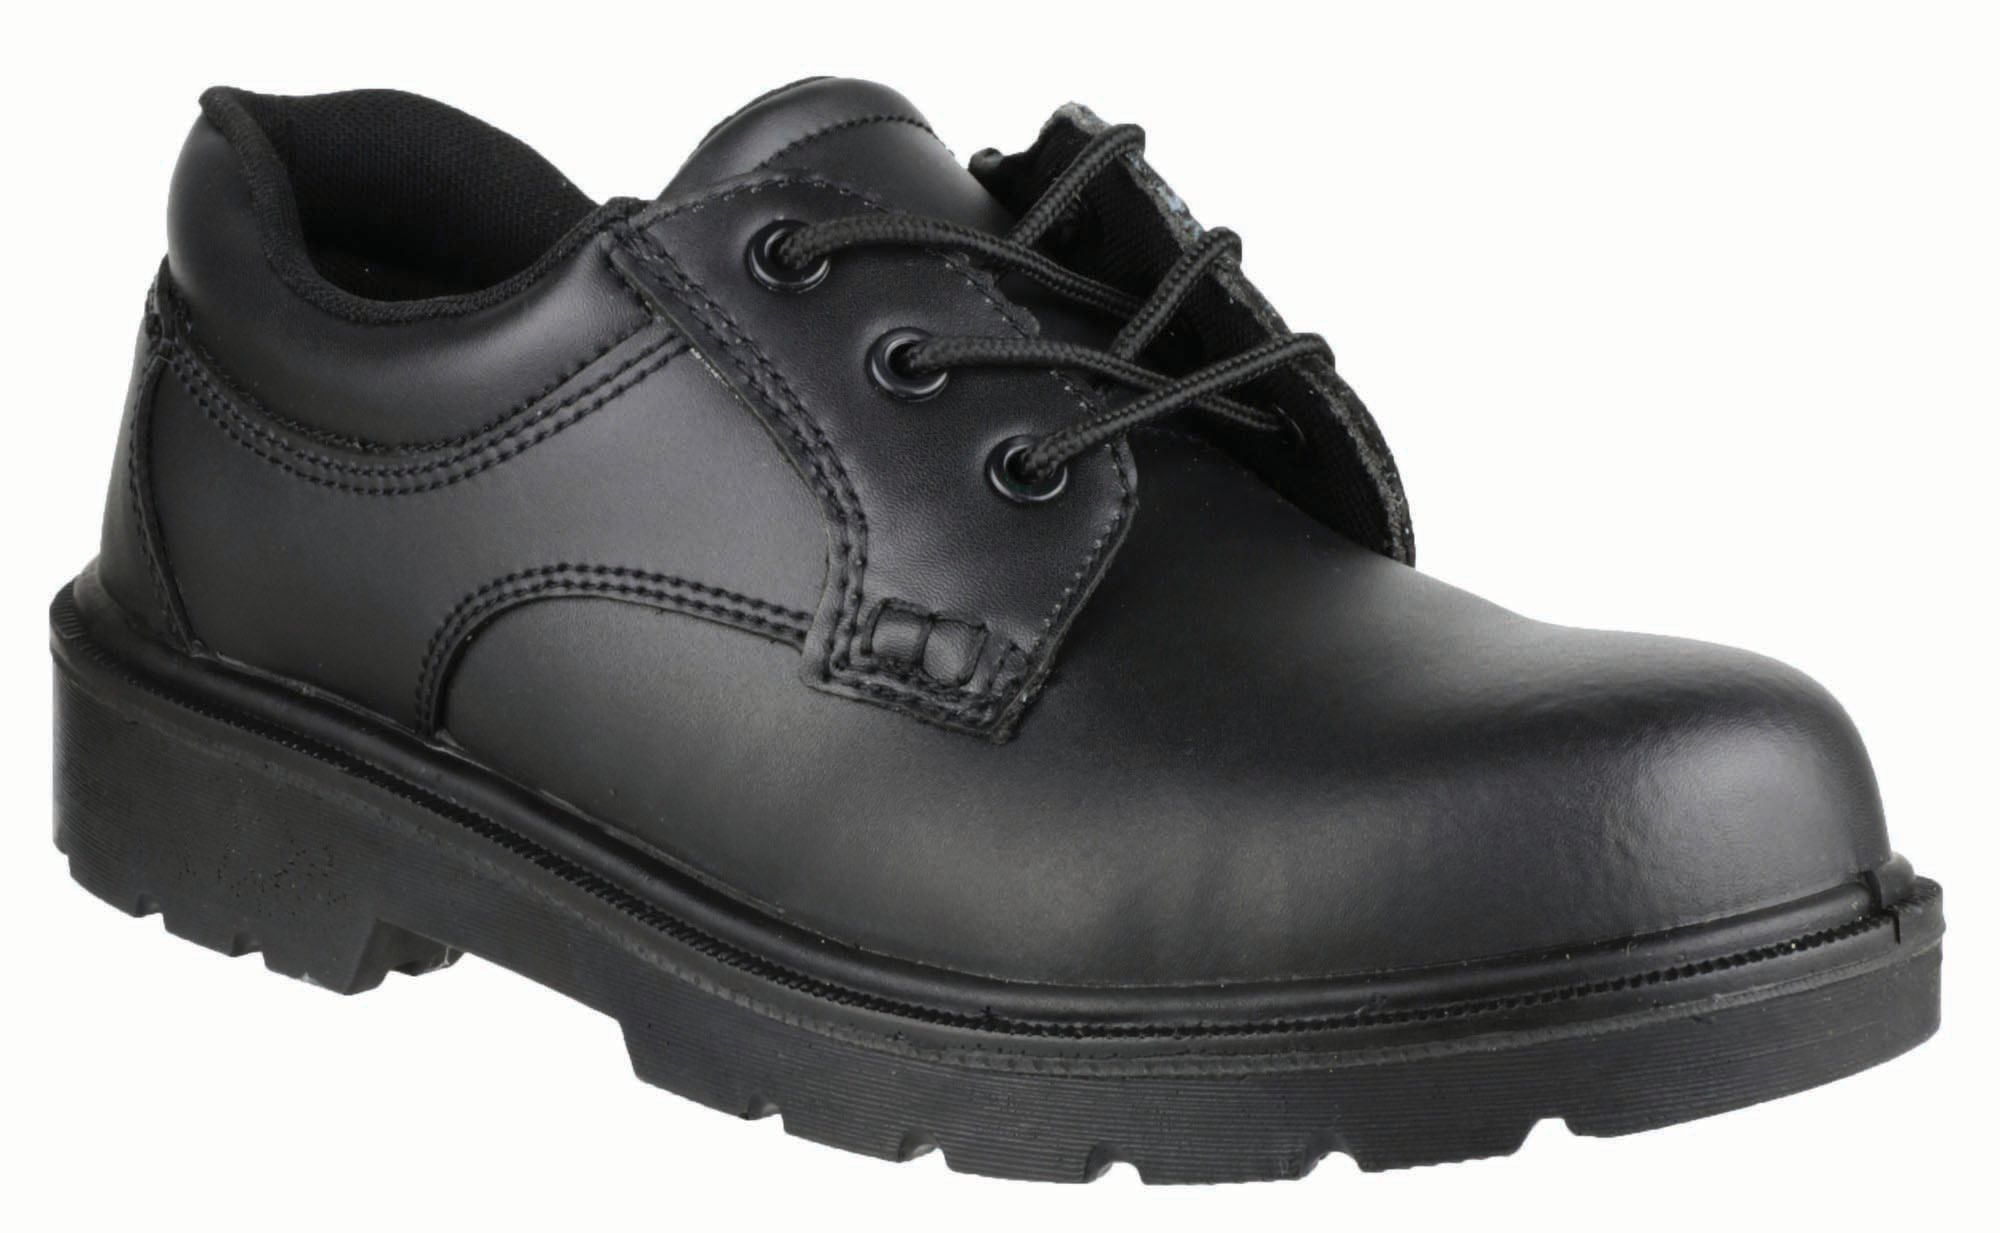 Image of Amblers Safety FS38C Safety Shoe - Black Size 4